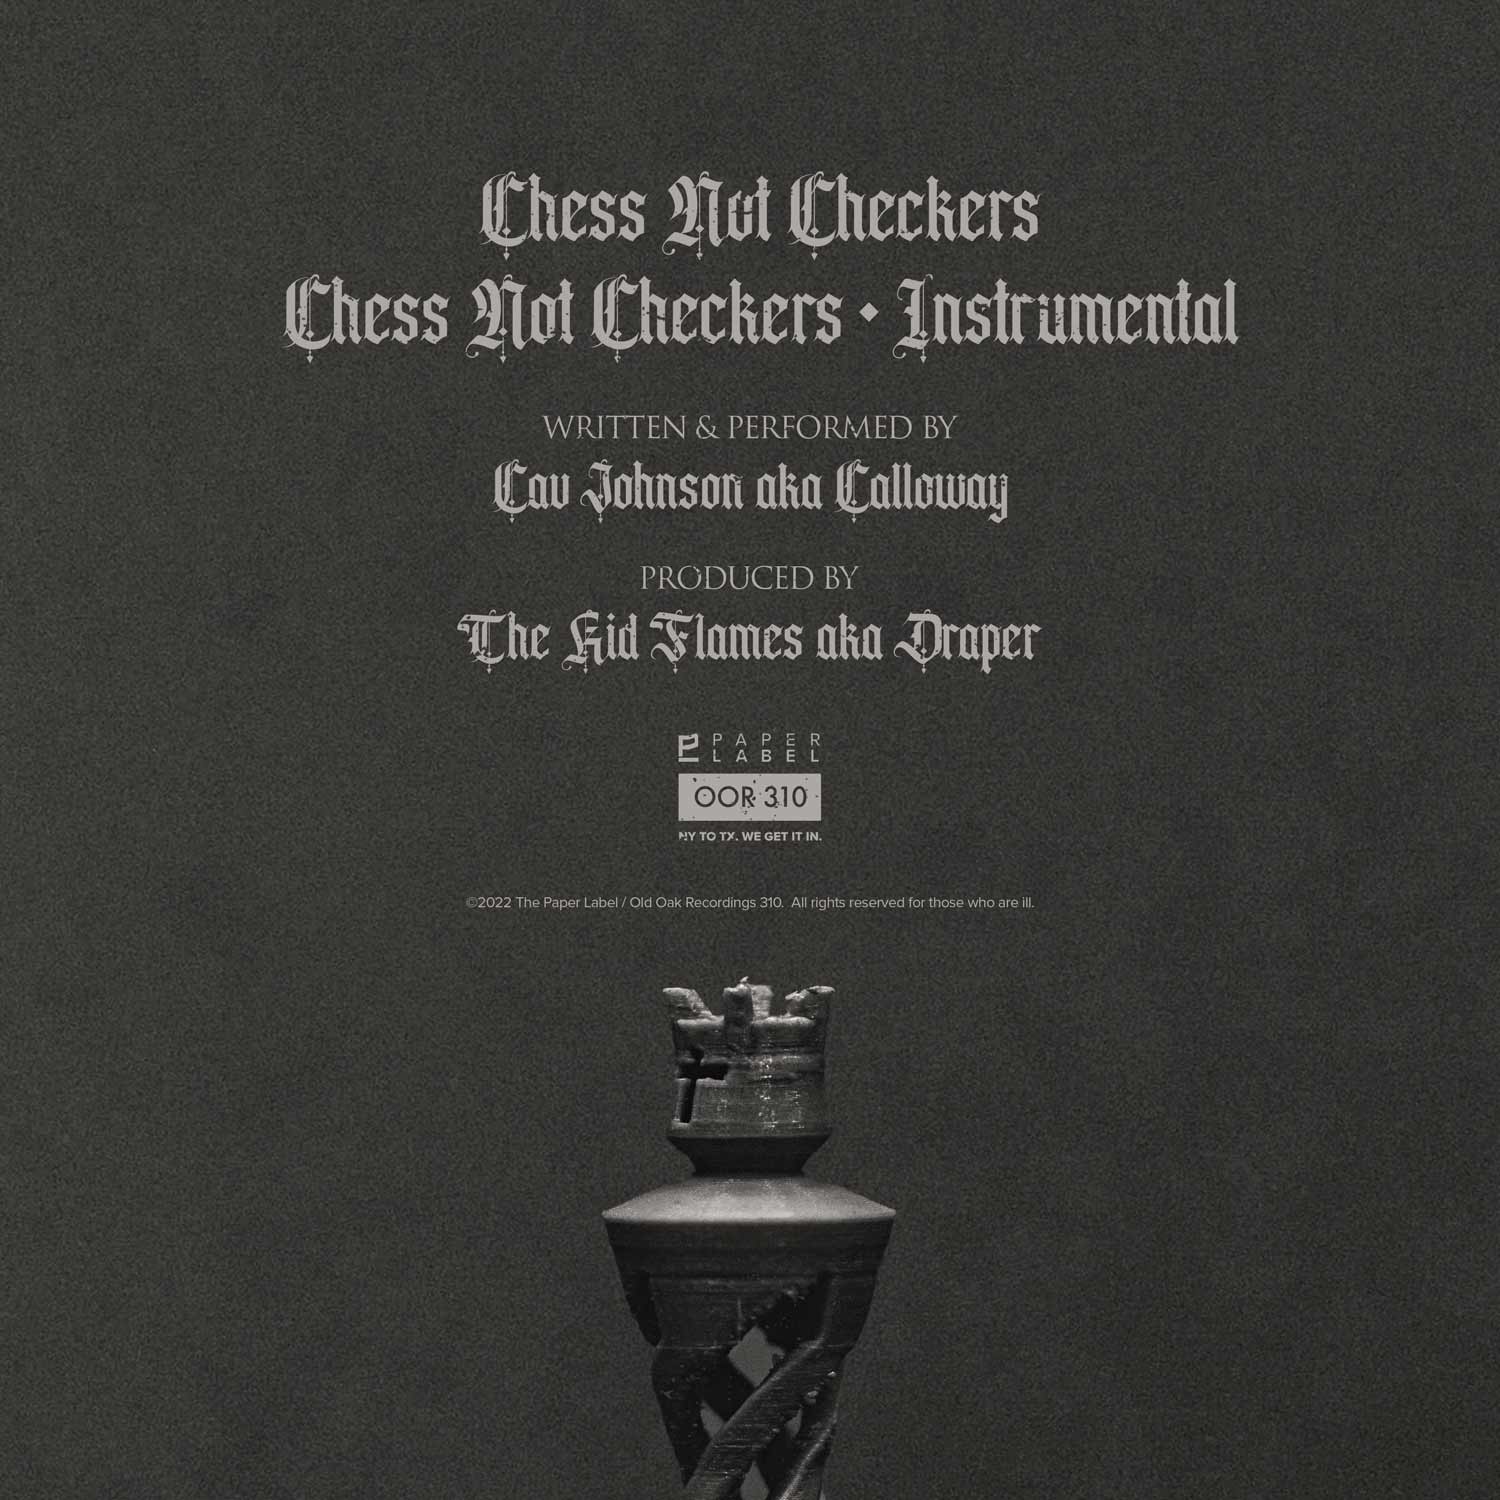 Cav Johnson & The Kid Flames "Chess Not Checkers" Back Cover Artwork